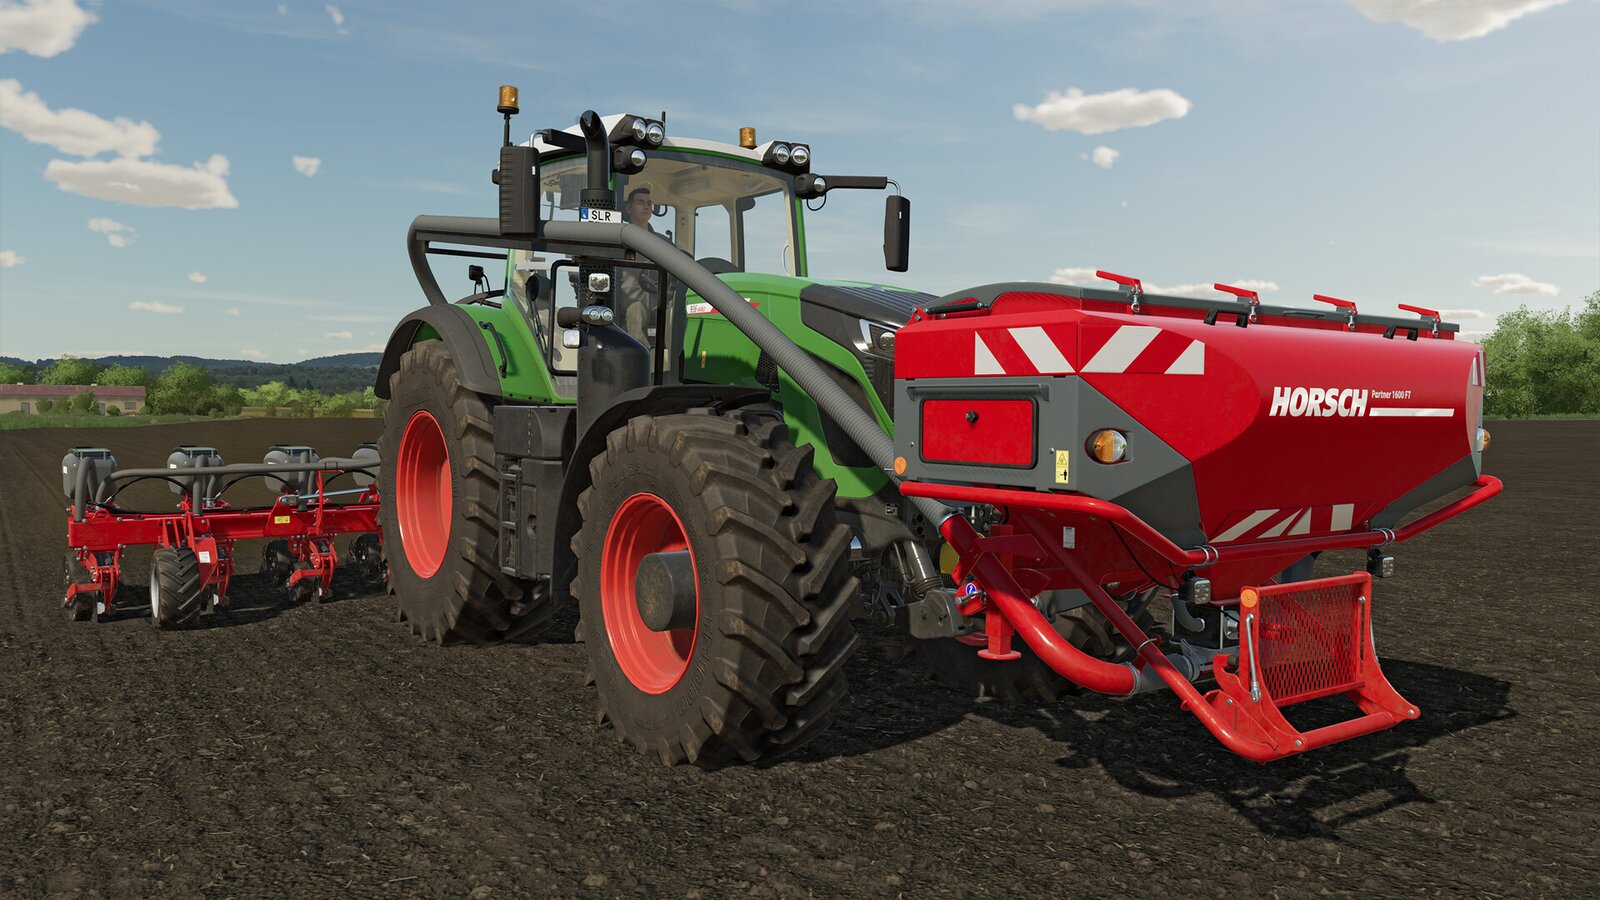 Farming Simulator 22 - HORSCH AgroVation Pack